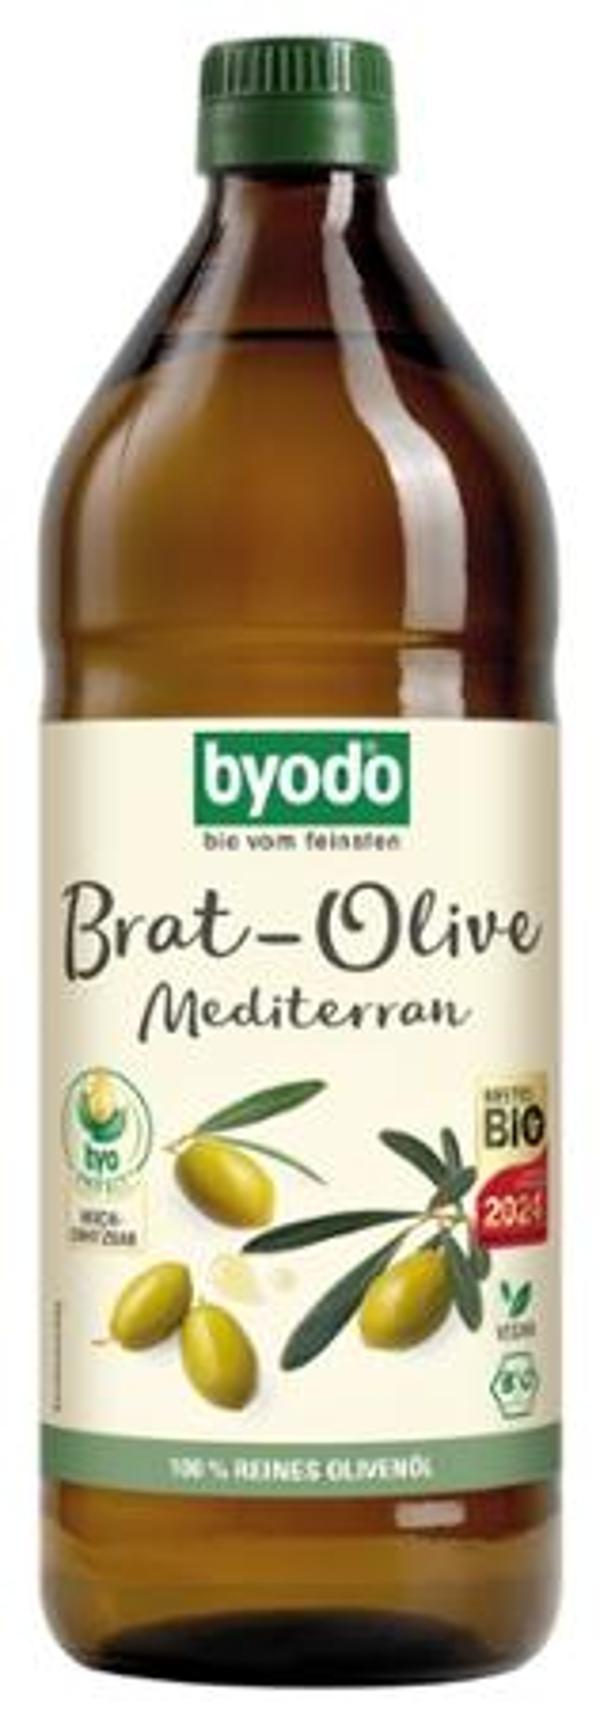 Produktfoto zu Bratöl Olive mediterran